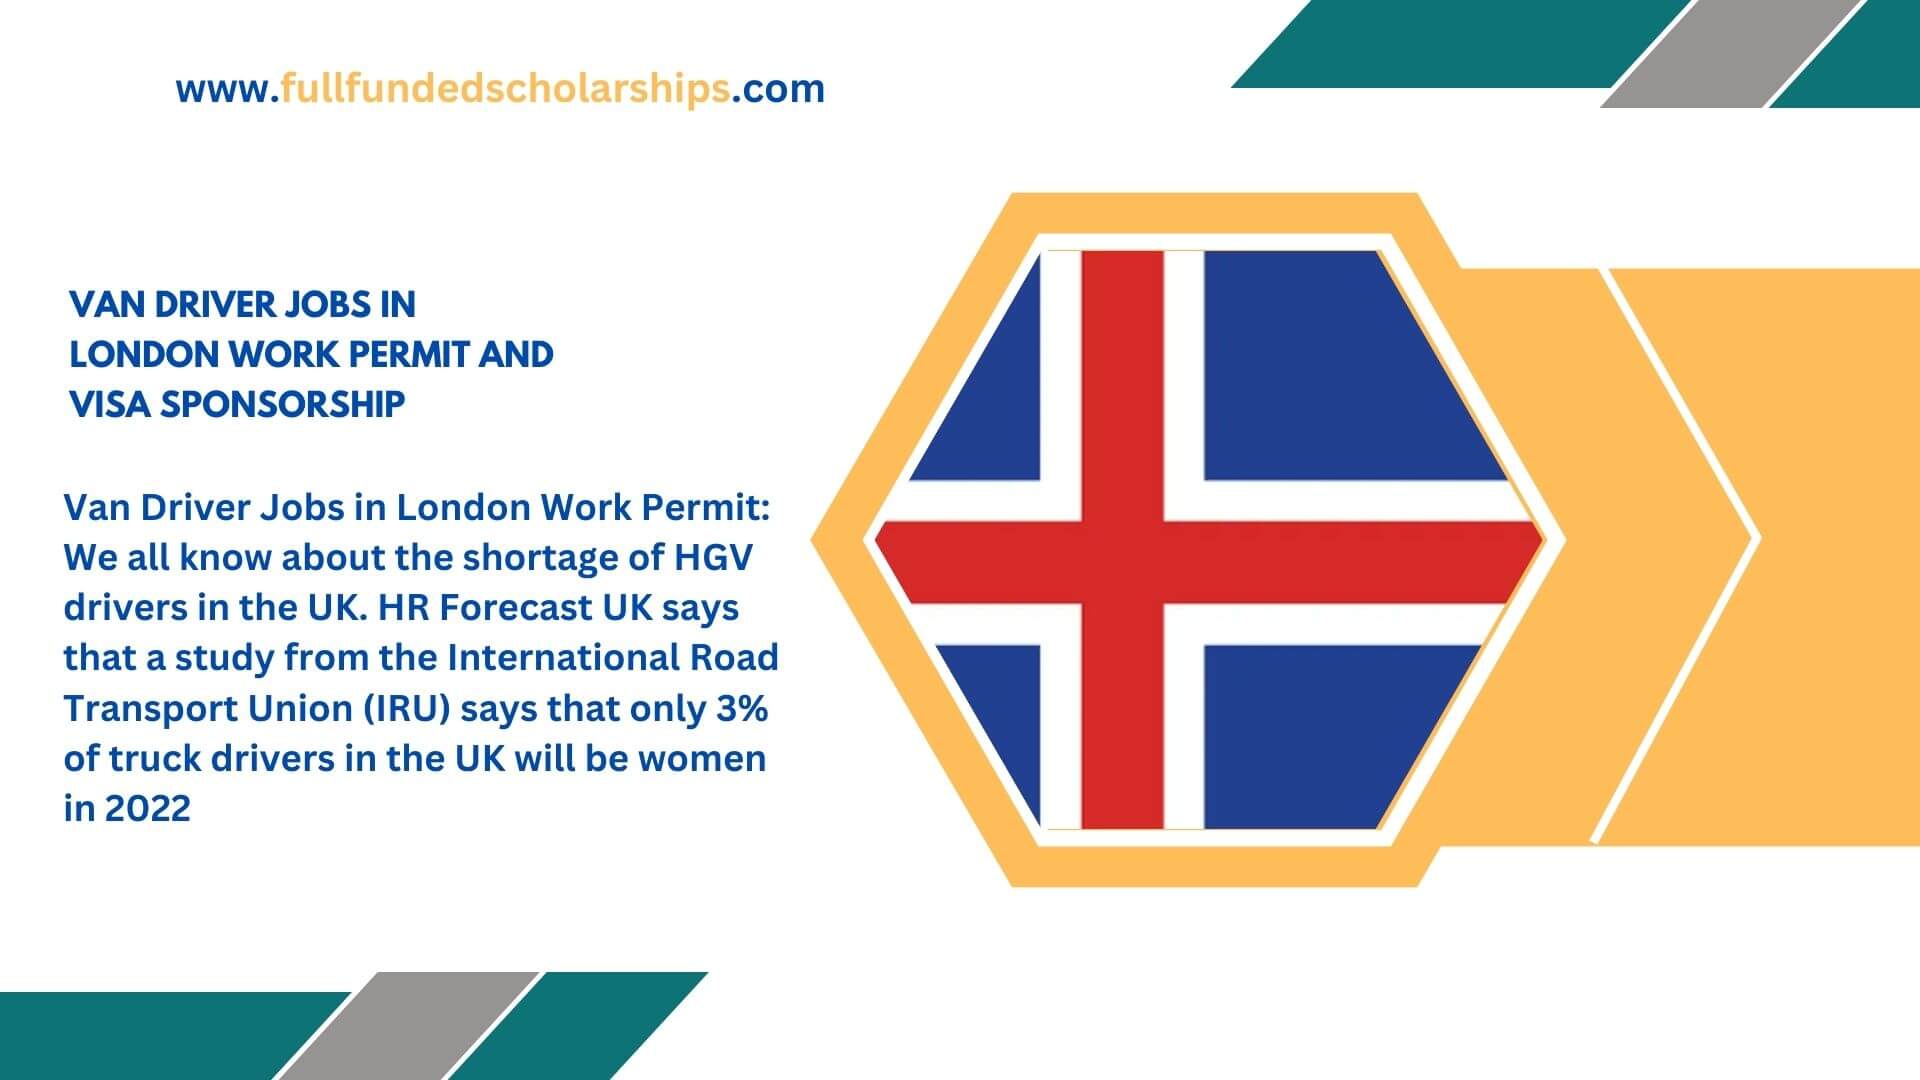 Van Driver Jobs in London Work Permit and Visa Sponsorship